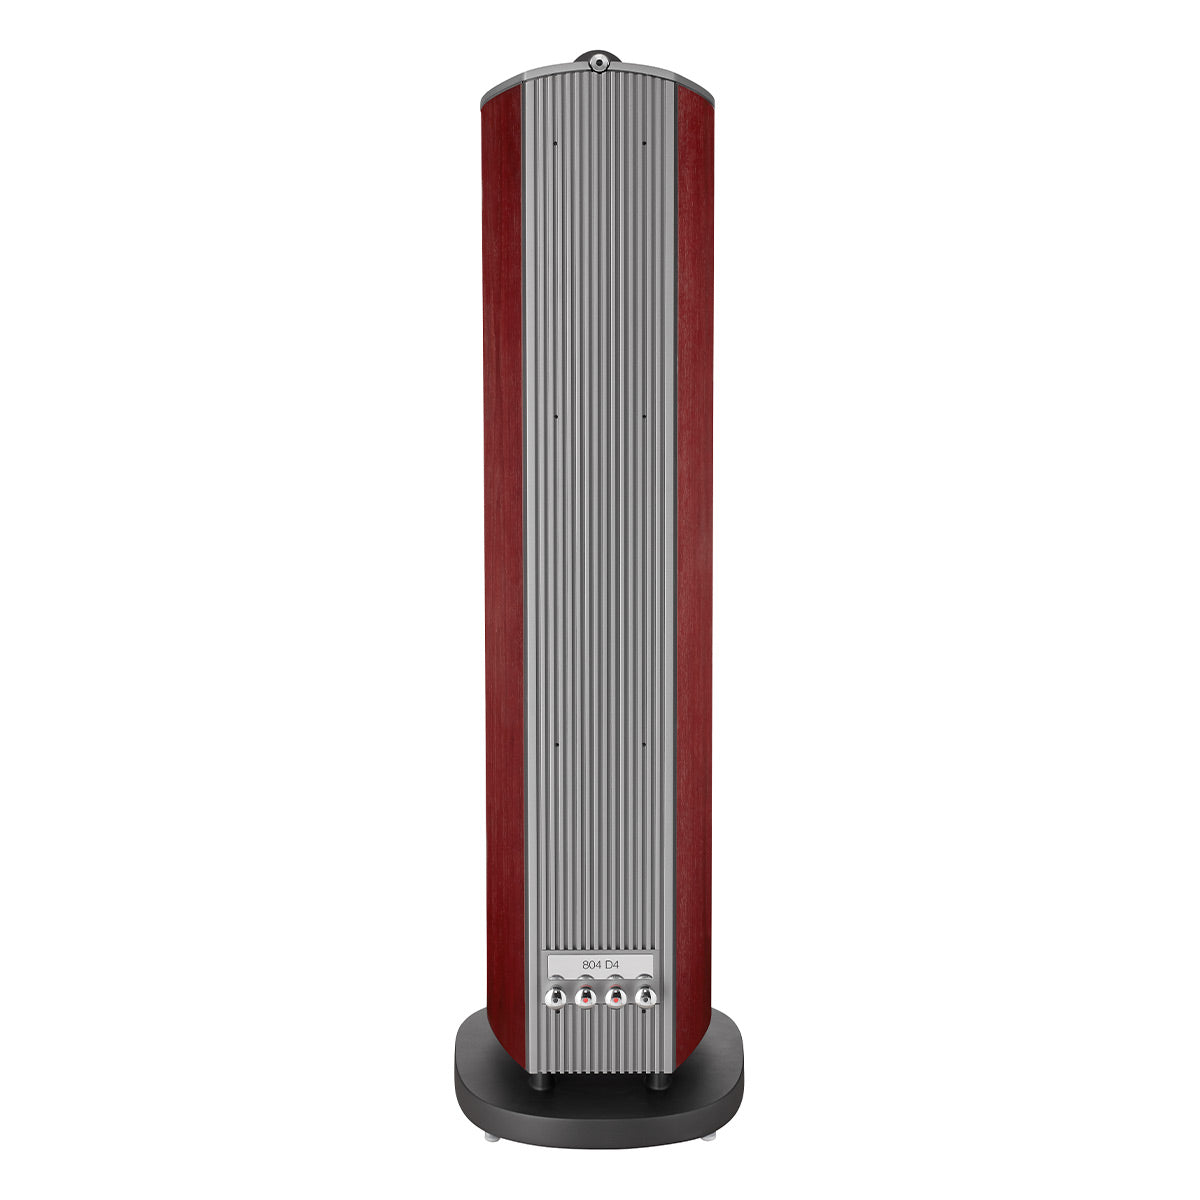 Bowers & Wilkins 804 D4 3-Way Floorstanding Speaker - Each (Satin Rosenut)